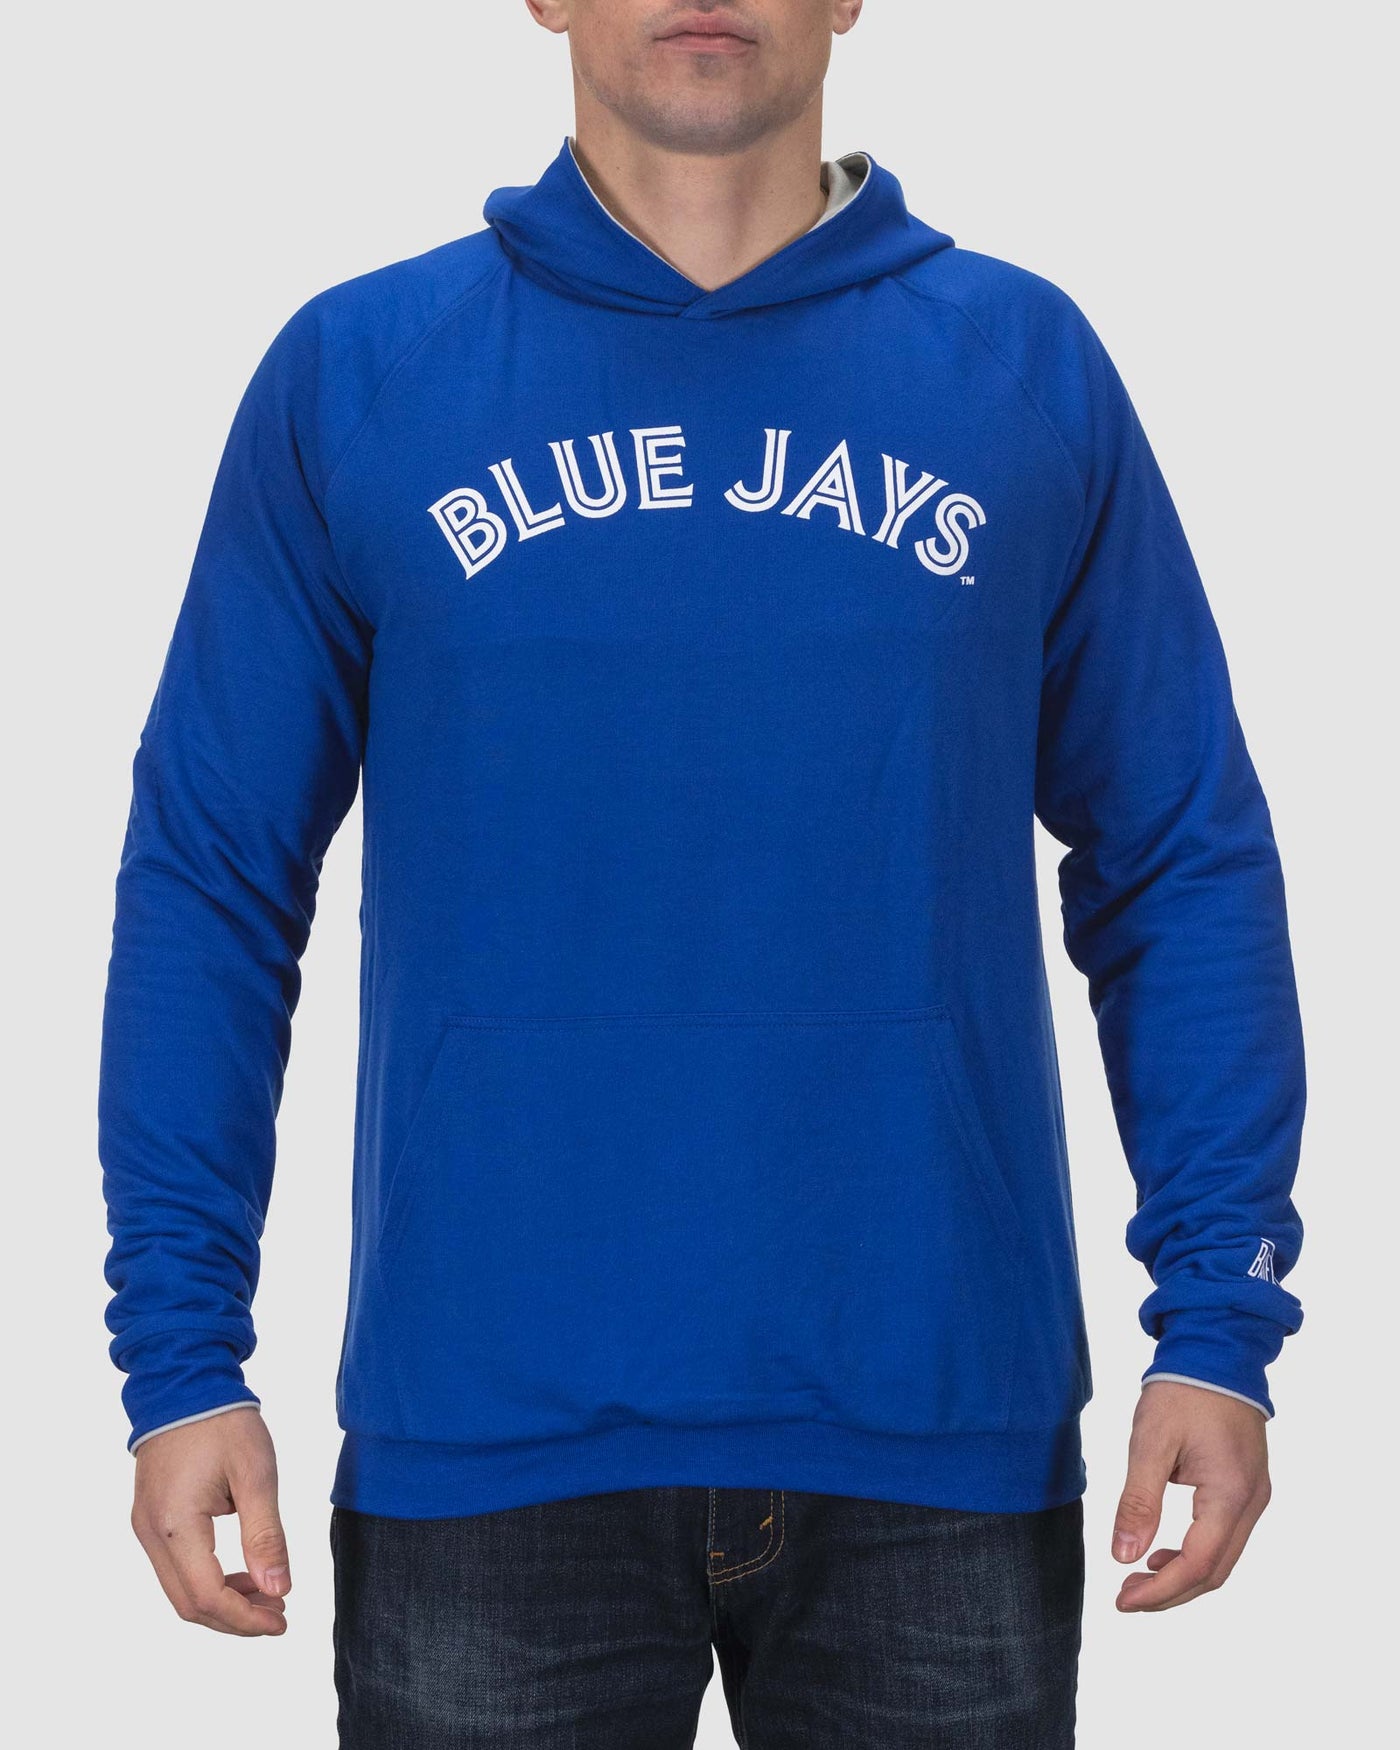 Double Play Reversible Hoodie - Toronto Blue Jays